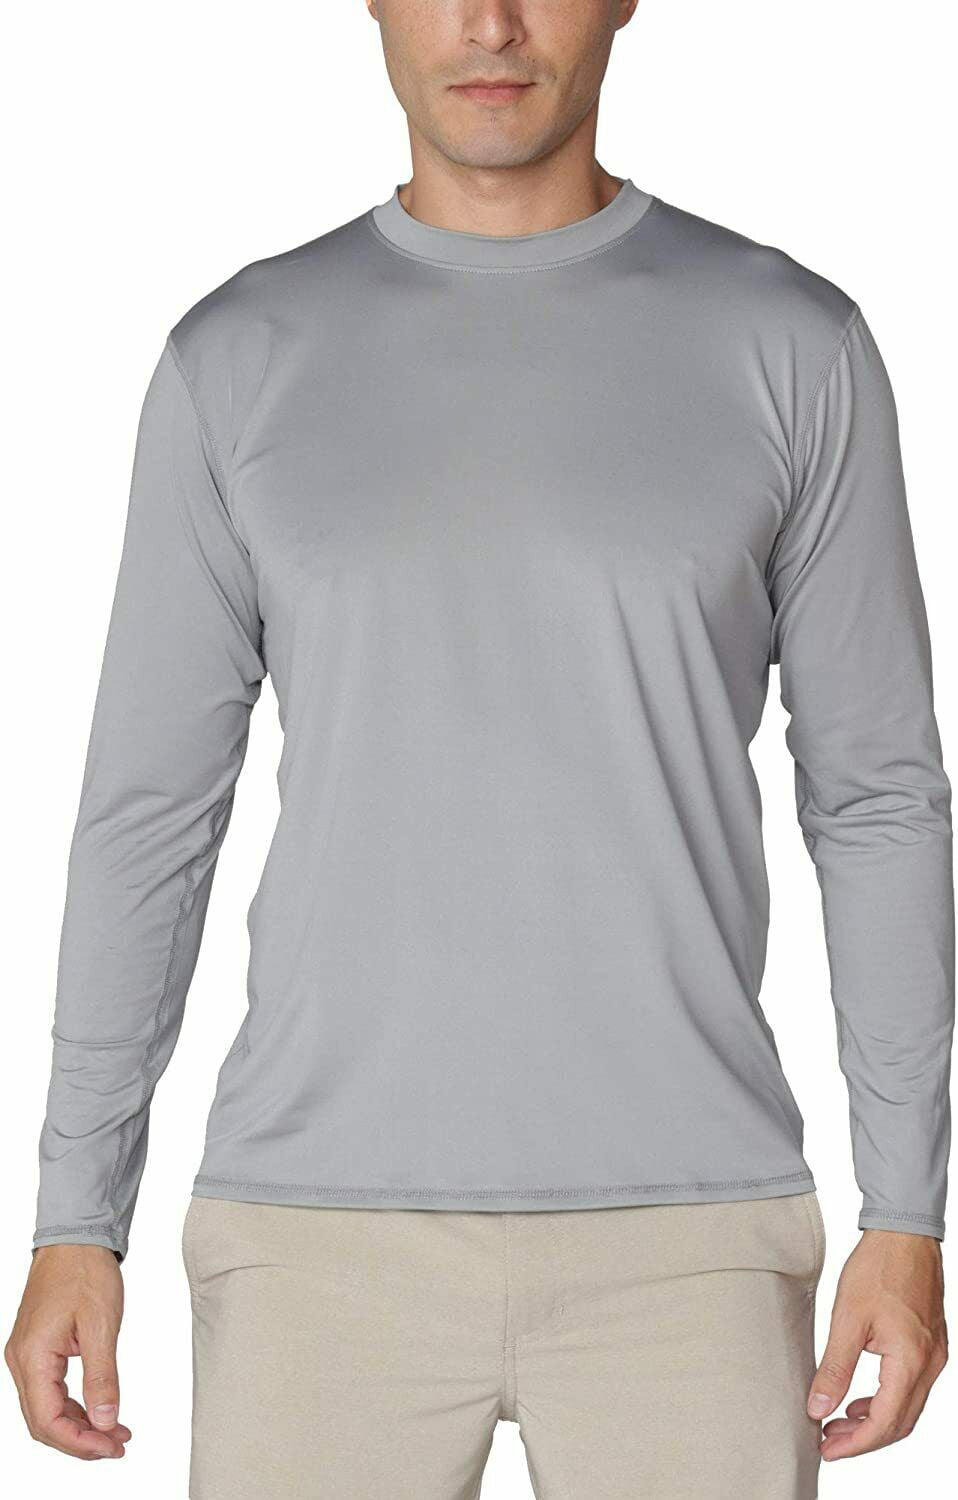 Men's UPF 50 UV Sun Protection Performance Long Sleeve T-Shirt Workout Quick Dry Rashguard 